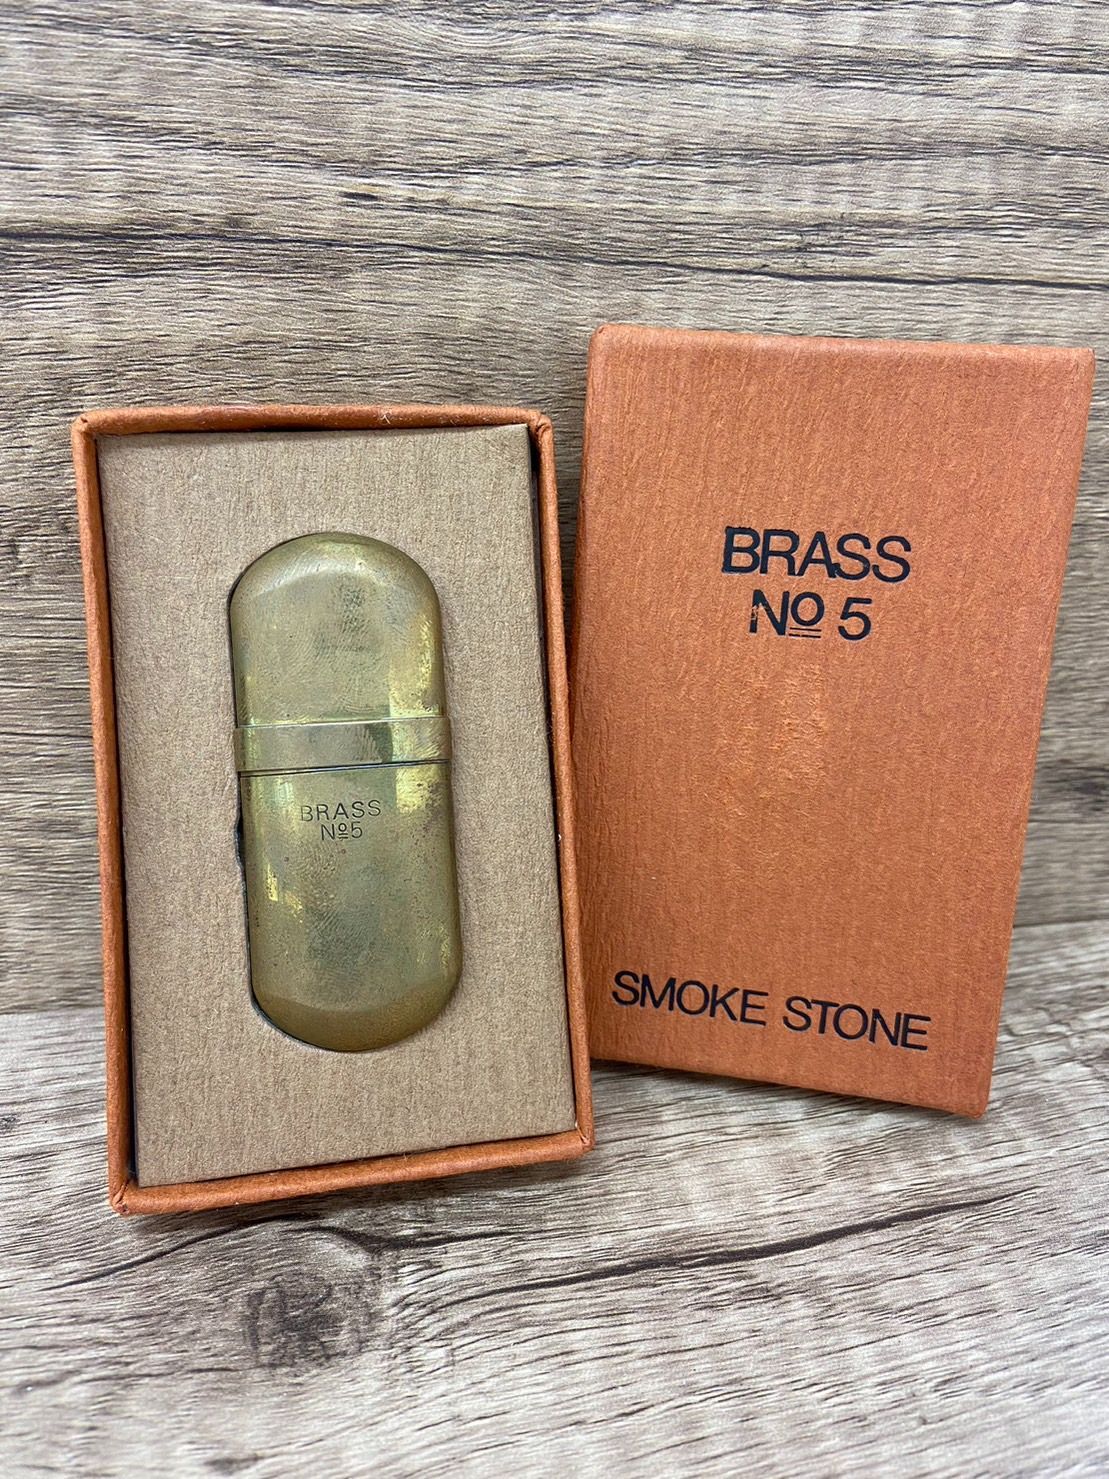 SMOKE STONE BRASS No5 真鍮製 オイルライター - ブランドアップ